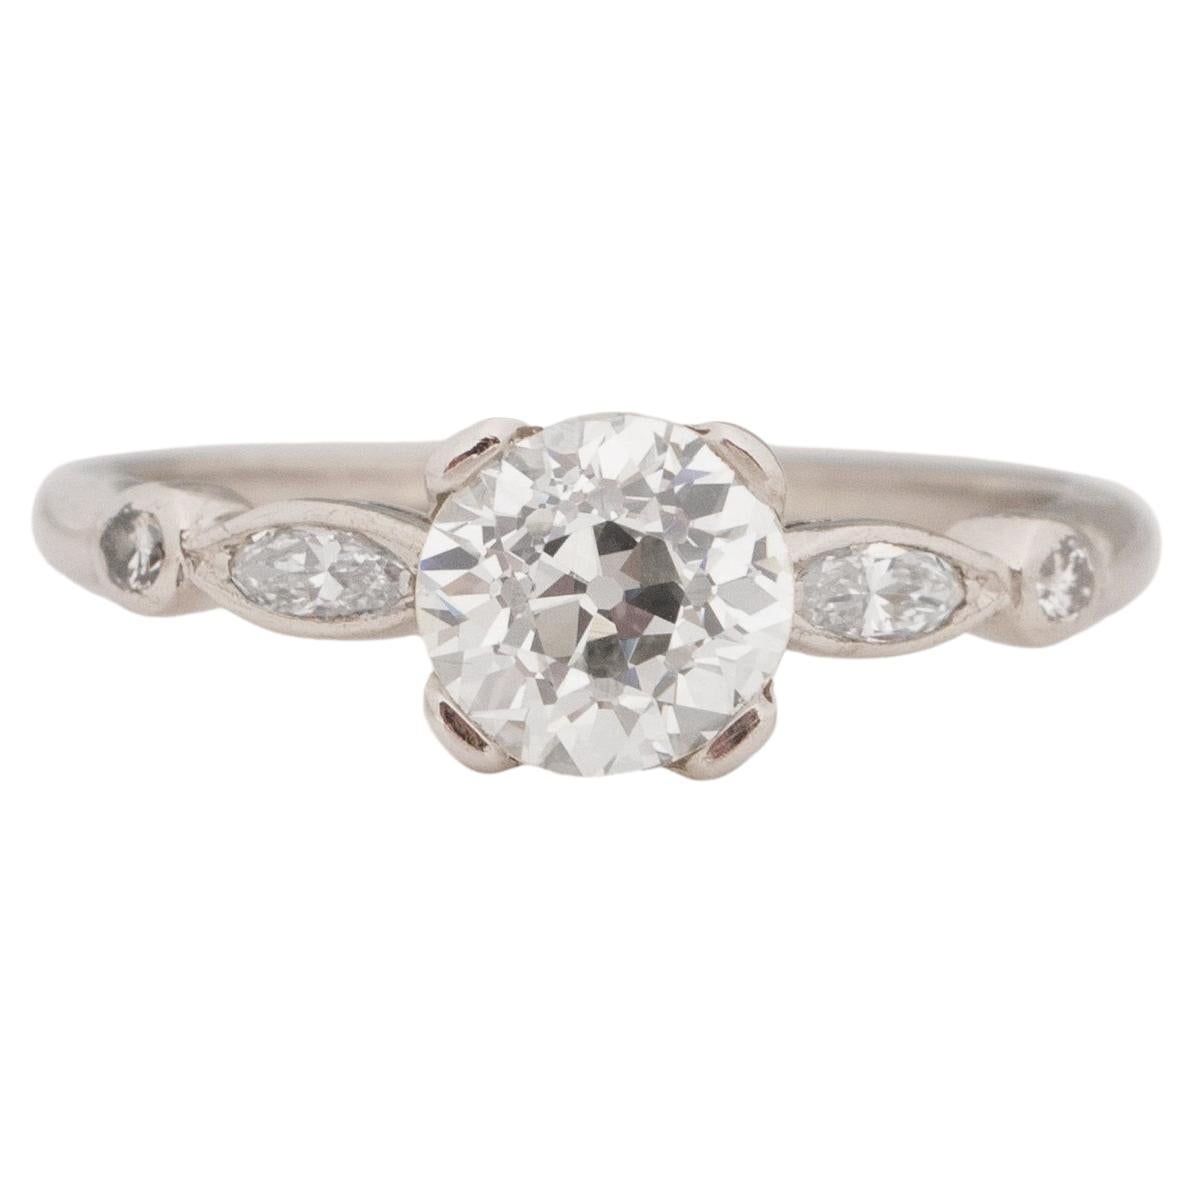 Platin-Verlobungsring mit GIA-zertifiziertem 1,06 Karat Art Deco-Diamant